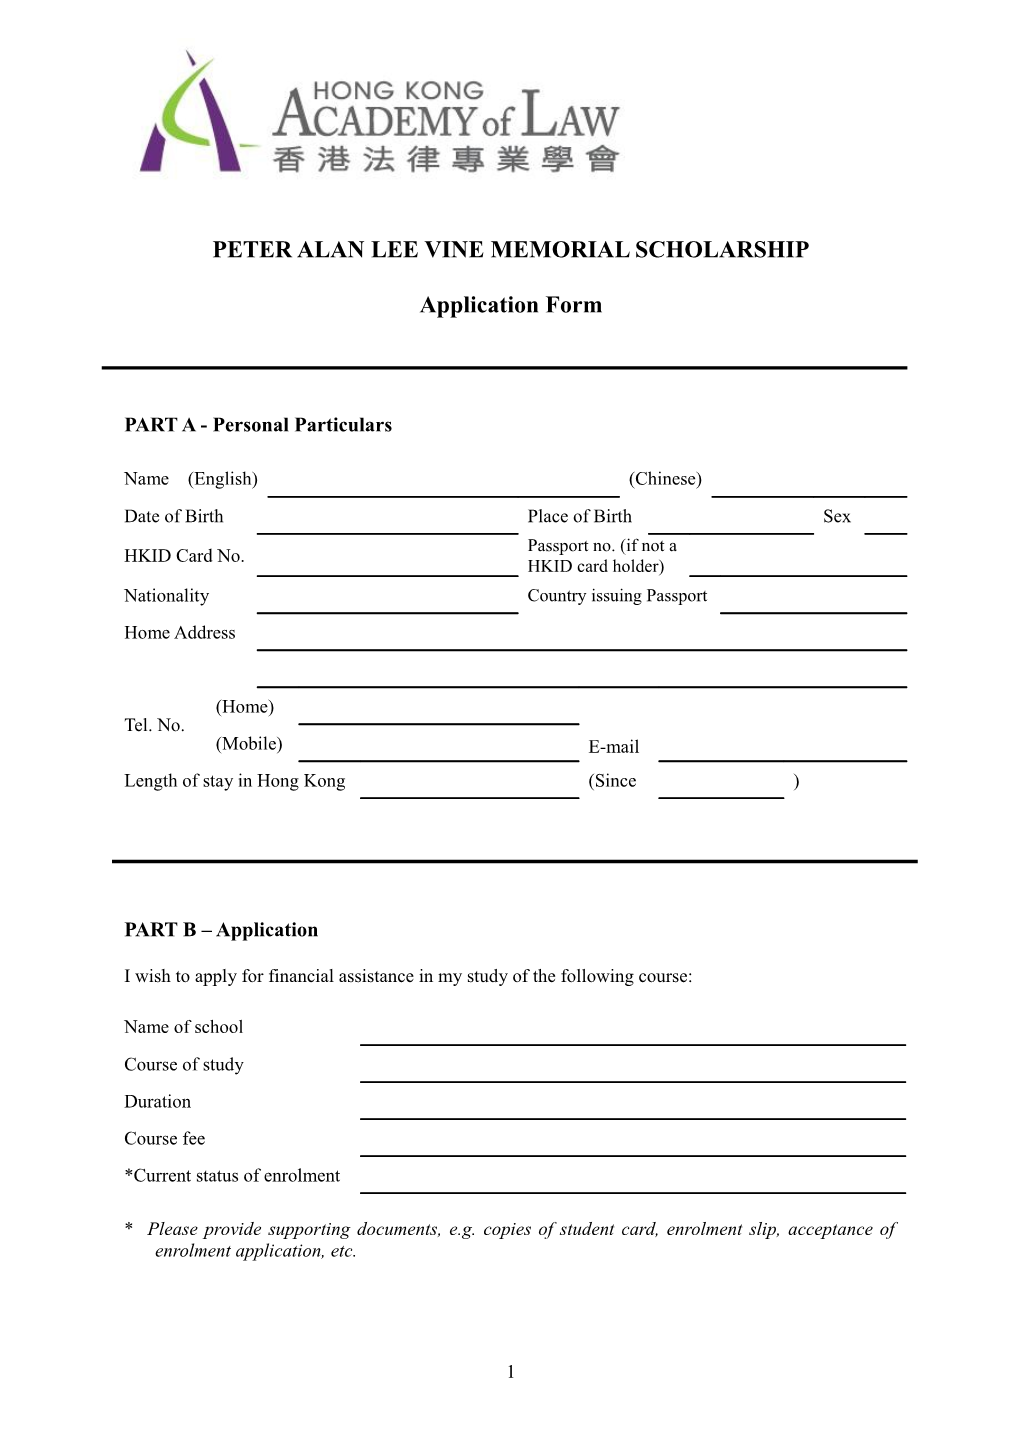 Peter Alan Lee Vine Memorial Scholarship